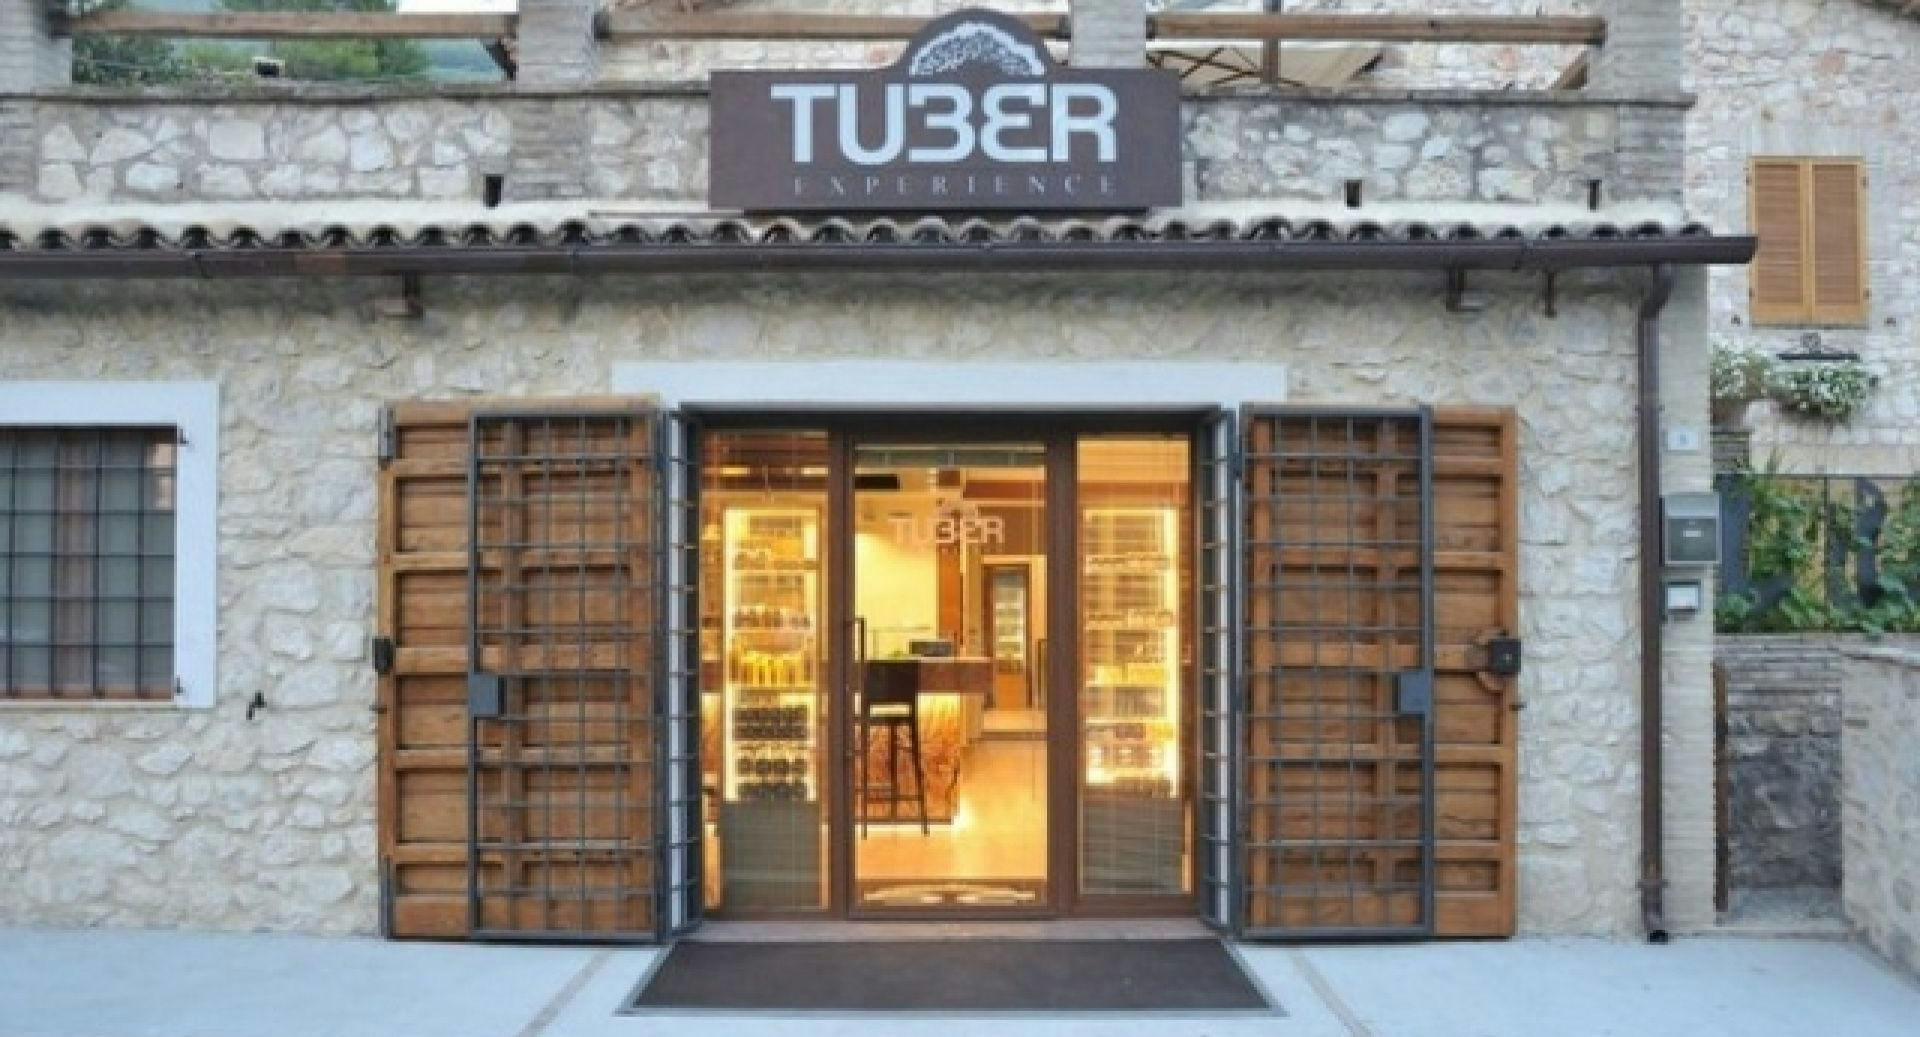 Photo of restaurant Tuber Experience in Campello sul Clitunno, Perugia